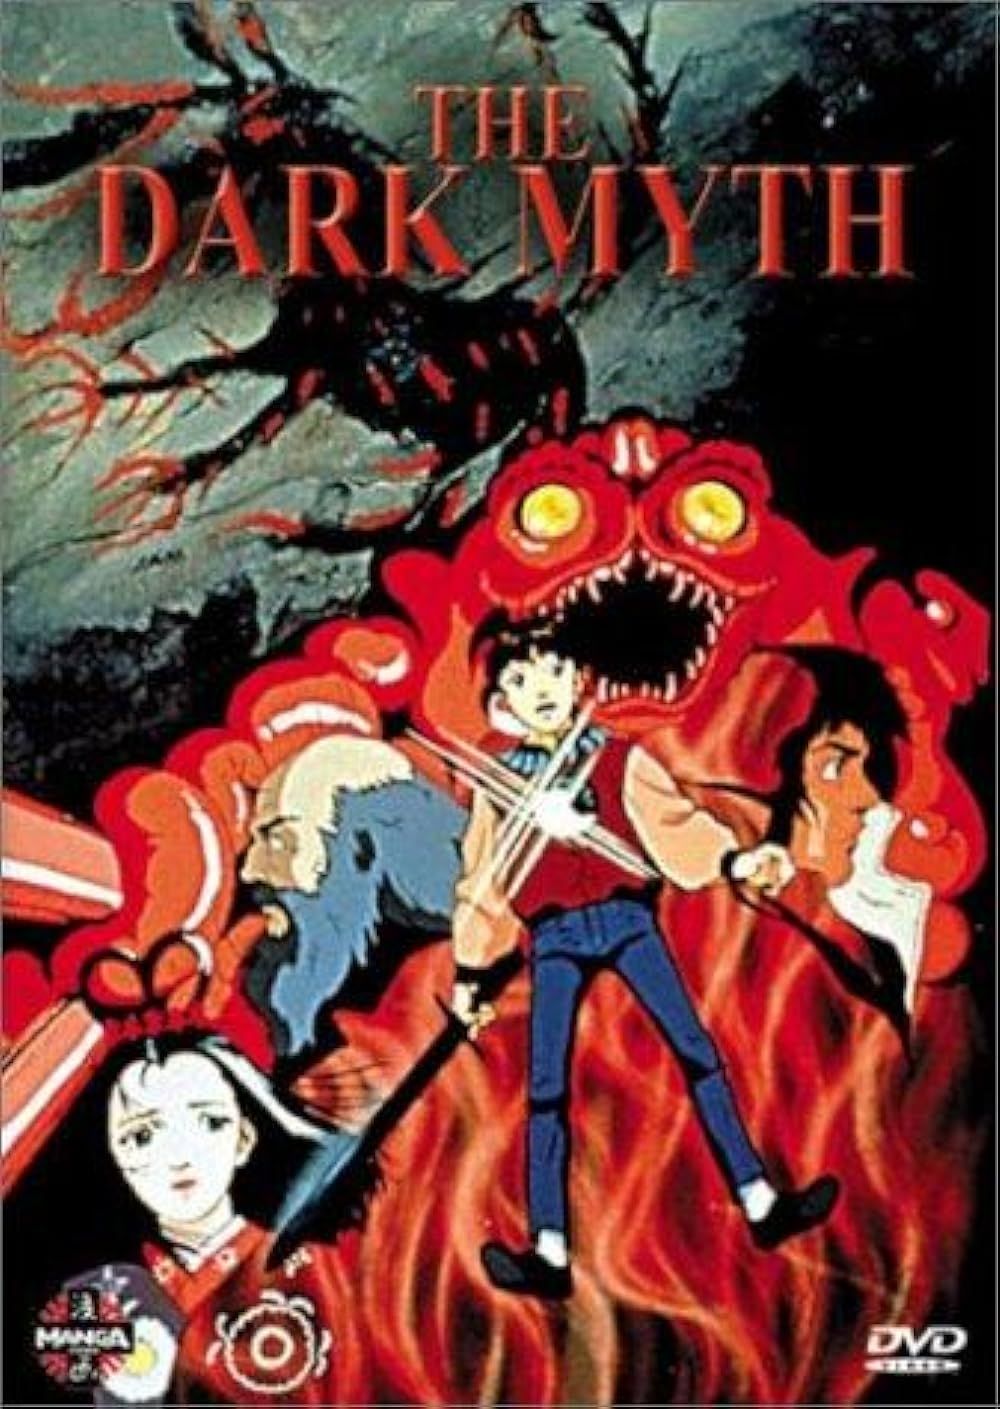 DVD cover of The Dark Myth anime series